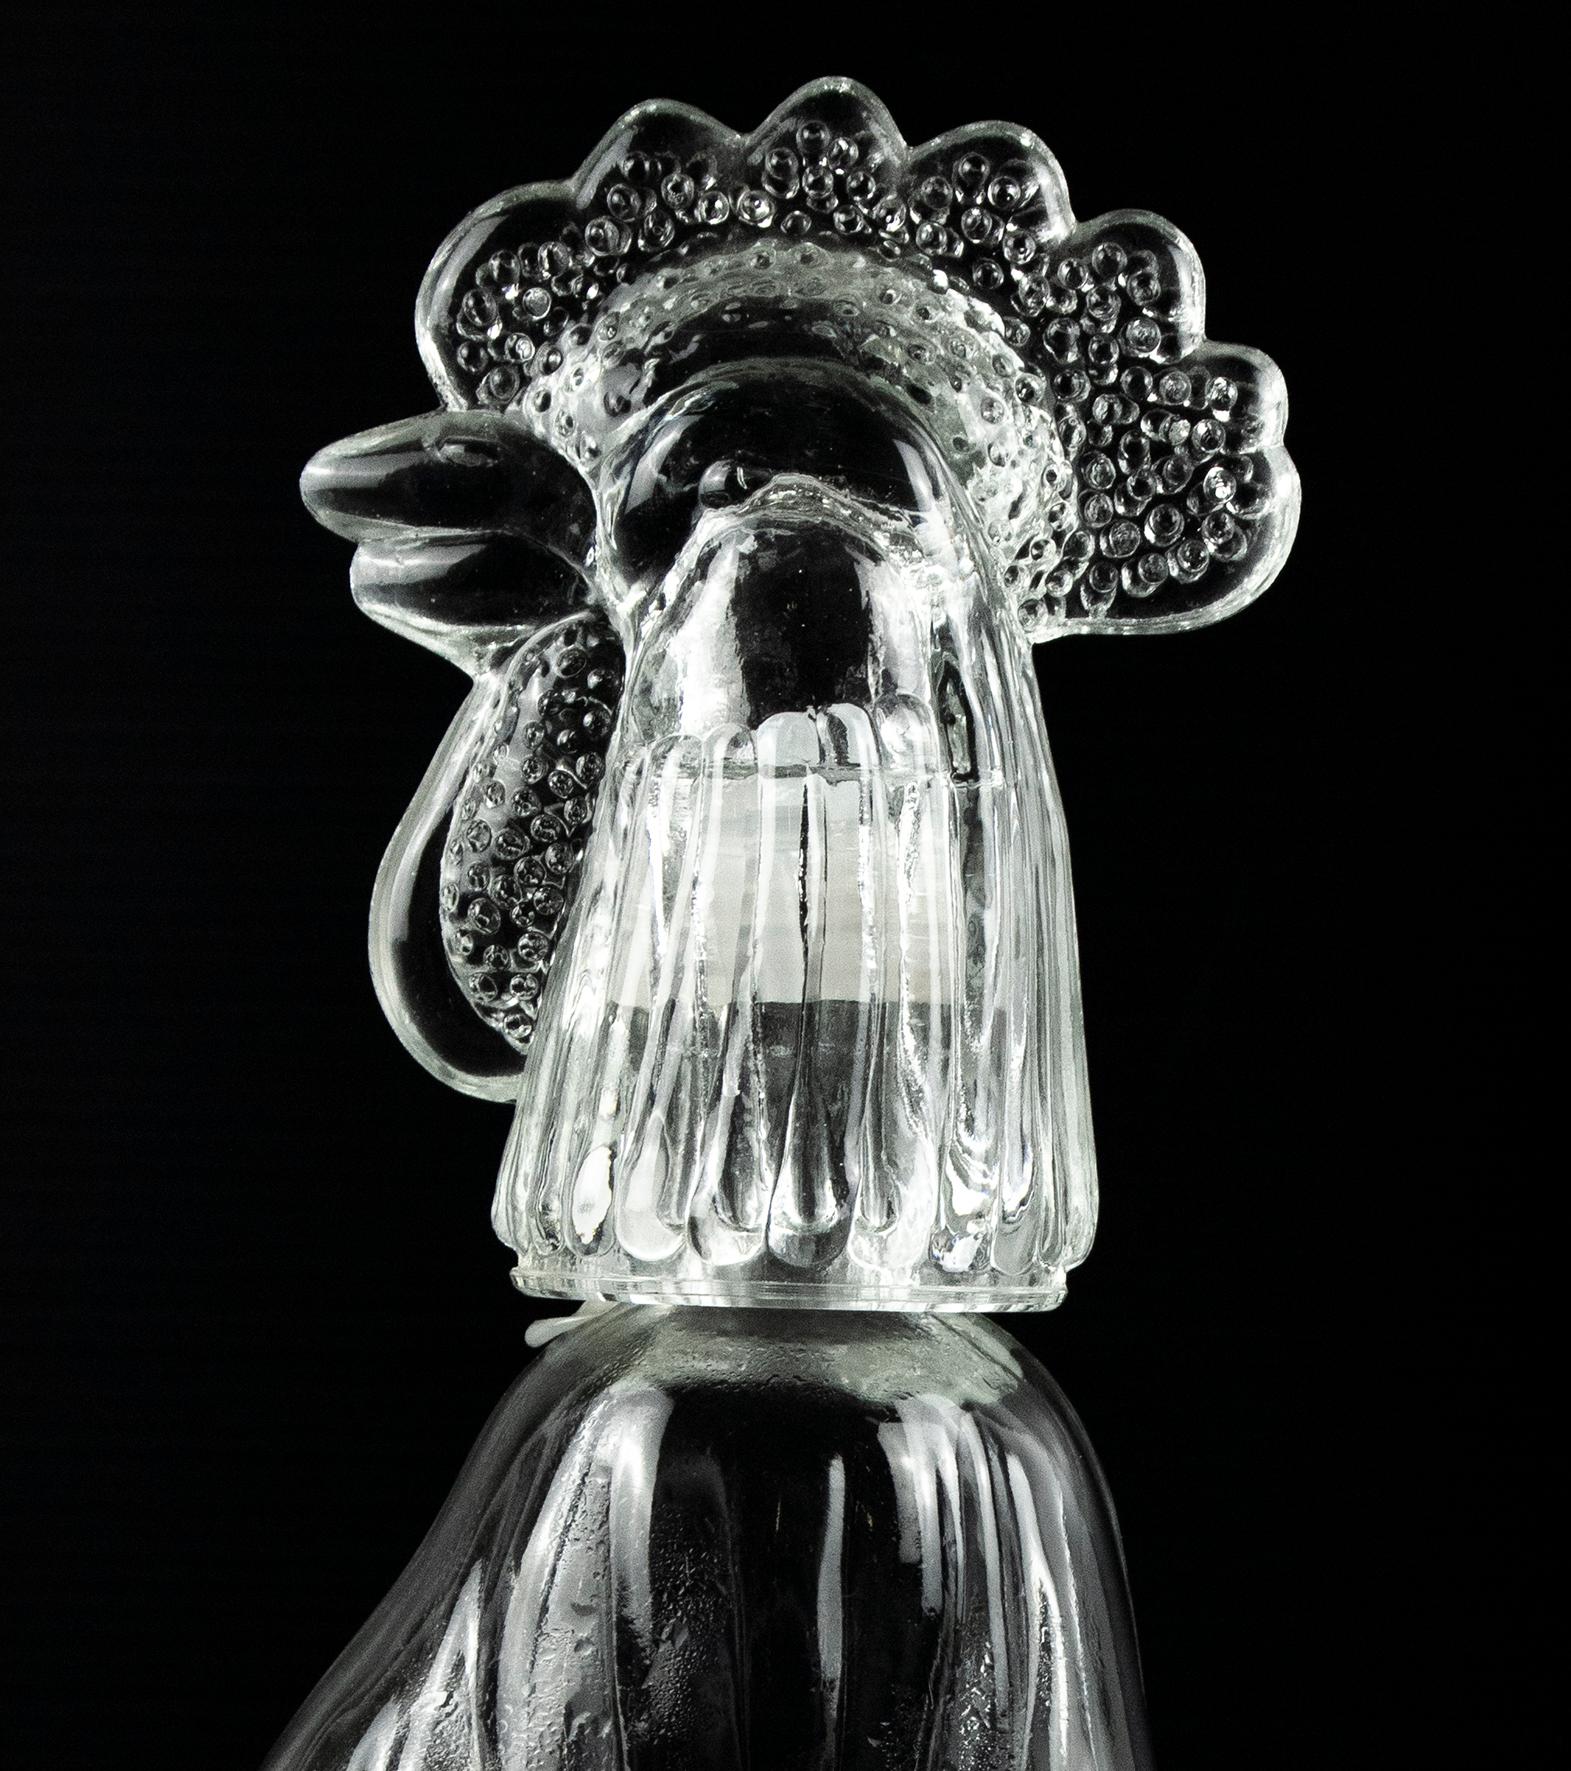 Italian Vintage Glass Rooster Shaped Bottle, Vintage Decorative Object, 1970s